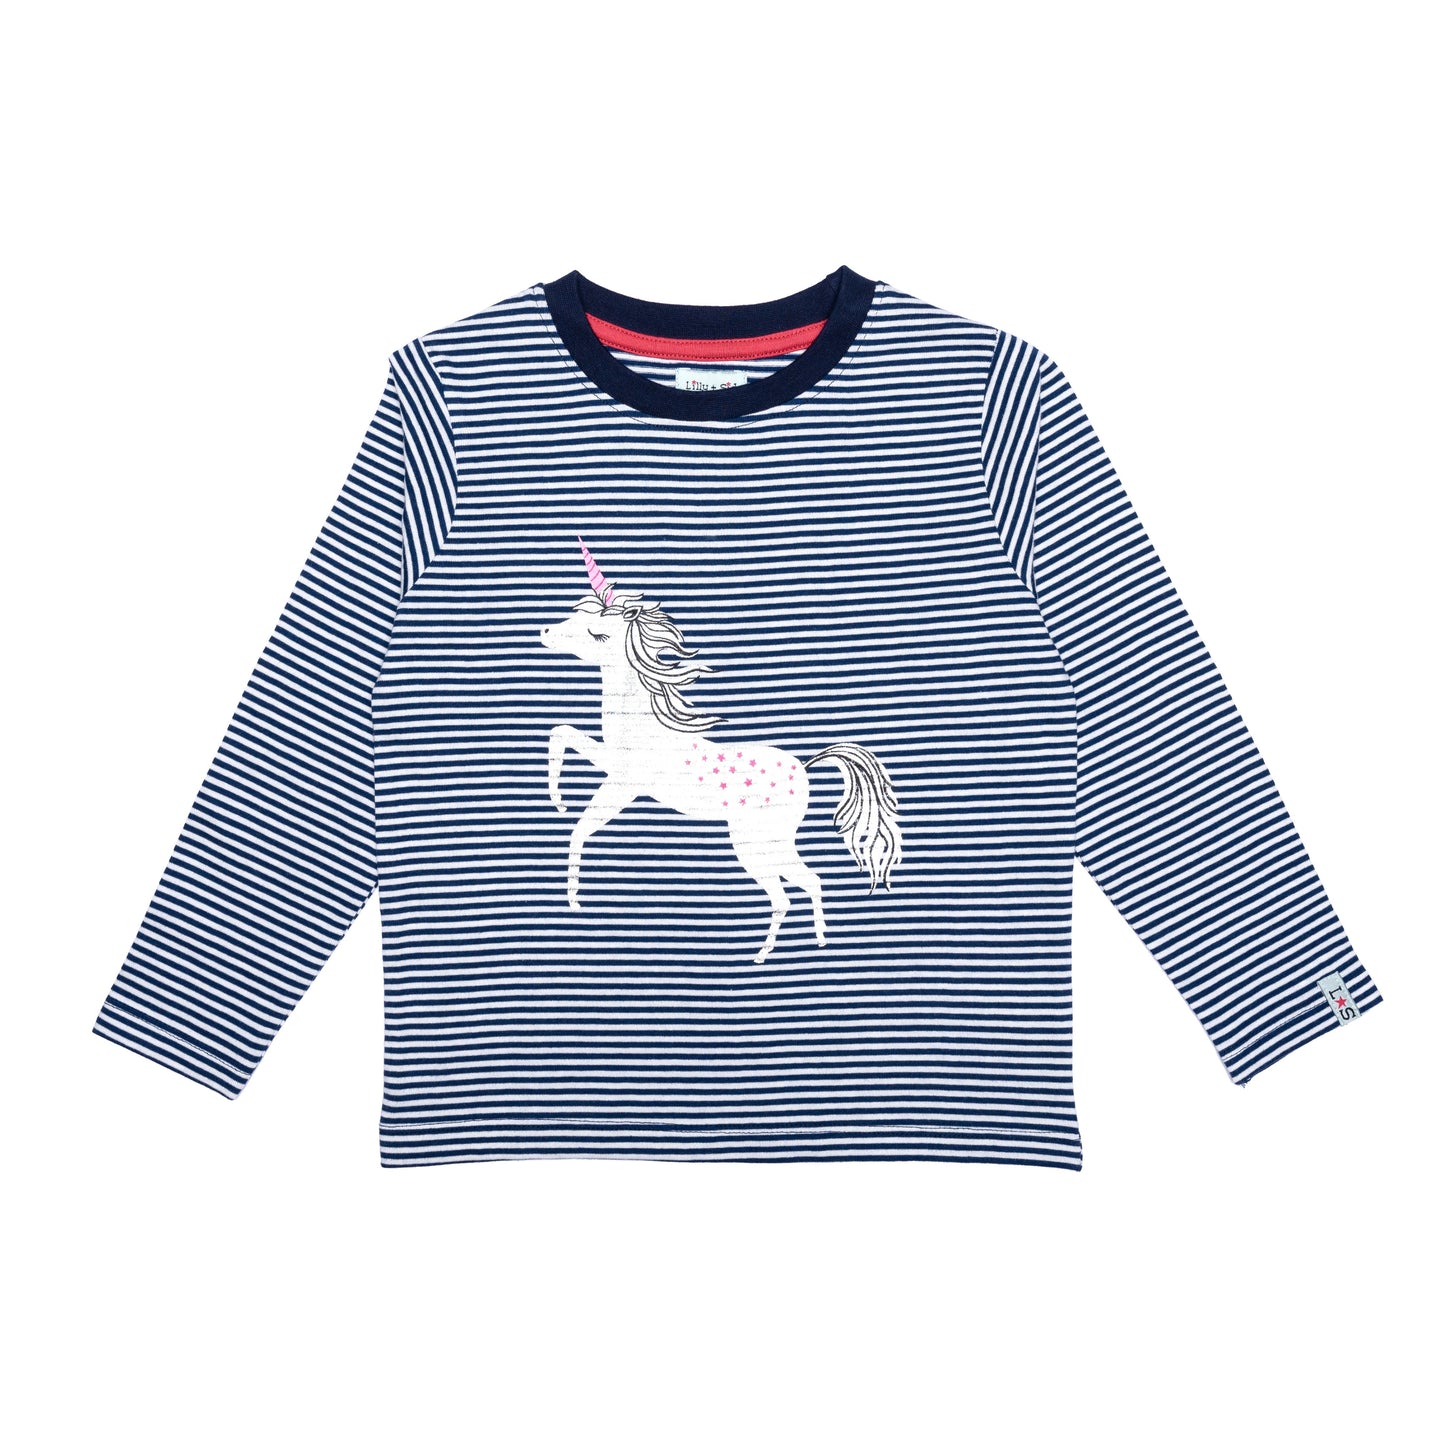 Unicorn Print Stripe Top